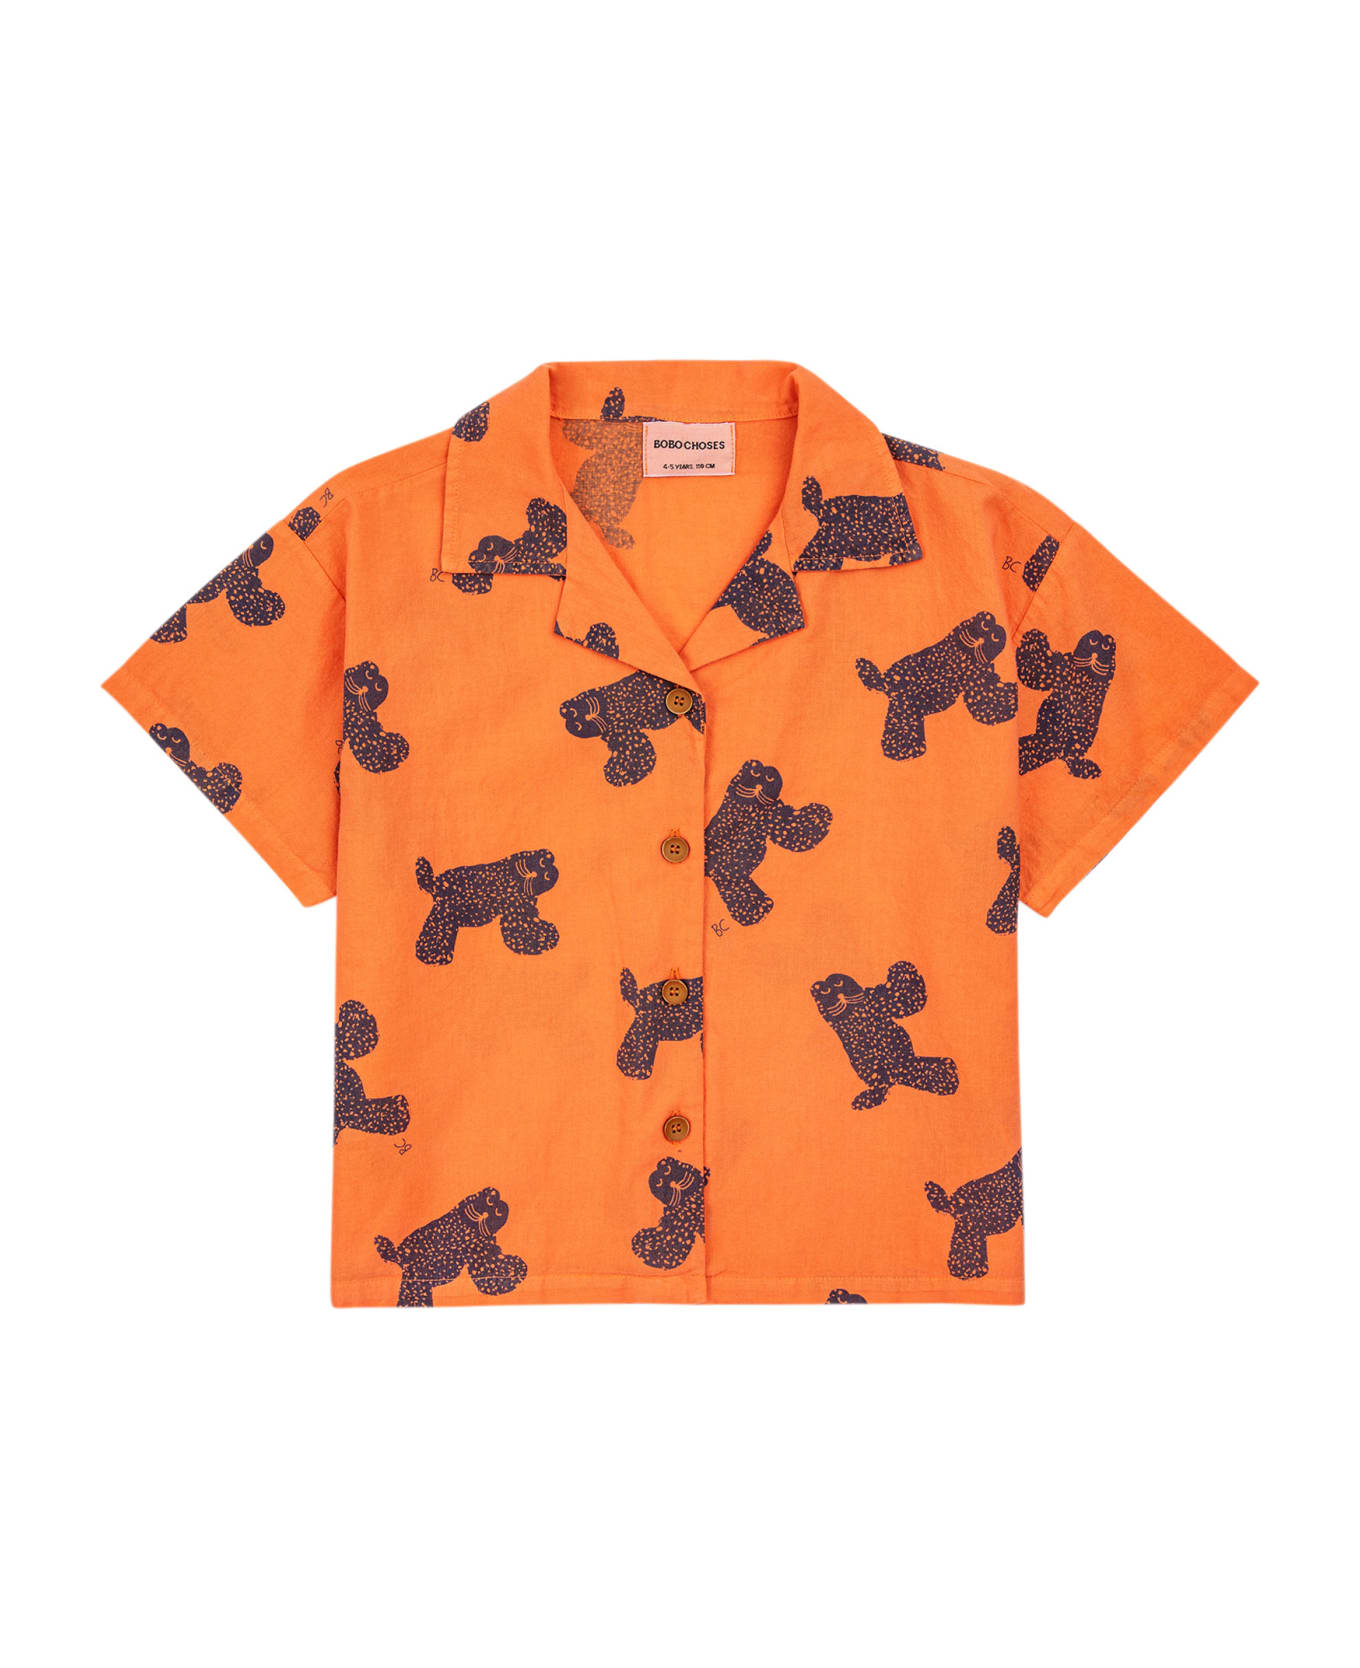 Bobo Choses Orange Shirt For Kids With Chetaahs - Orange